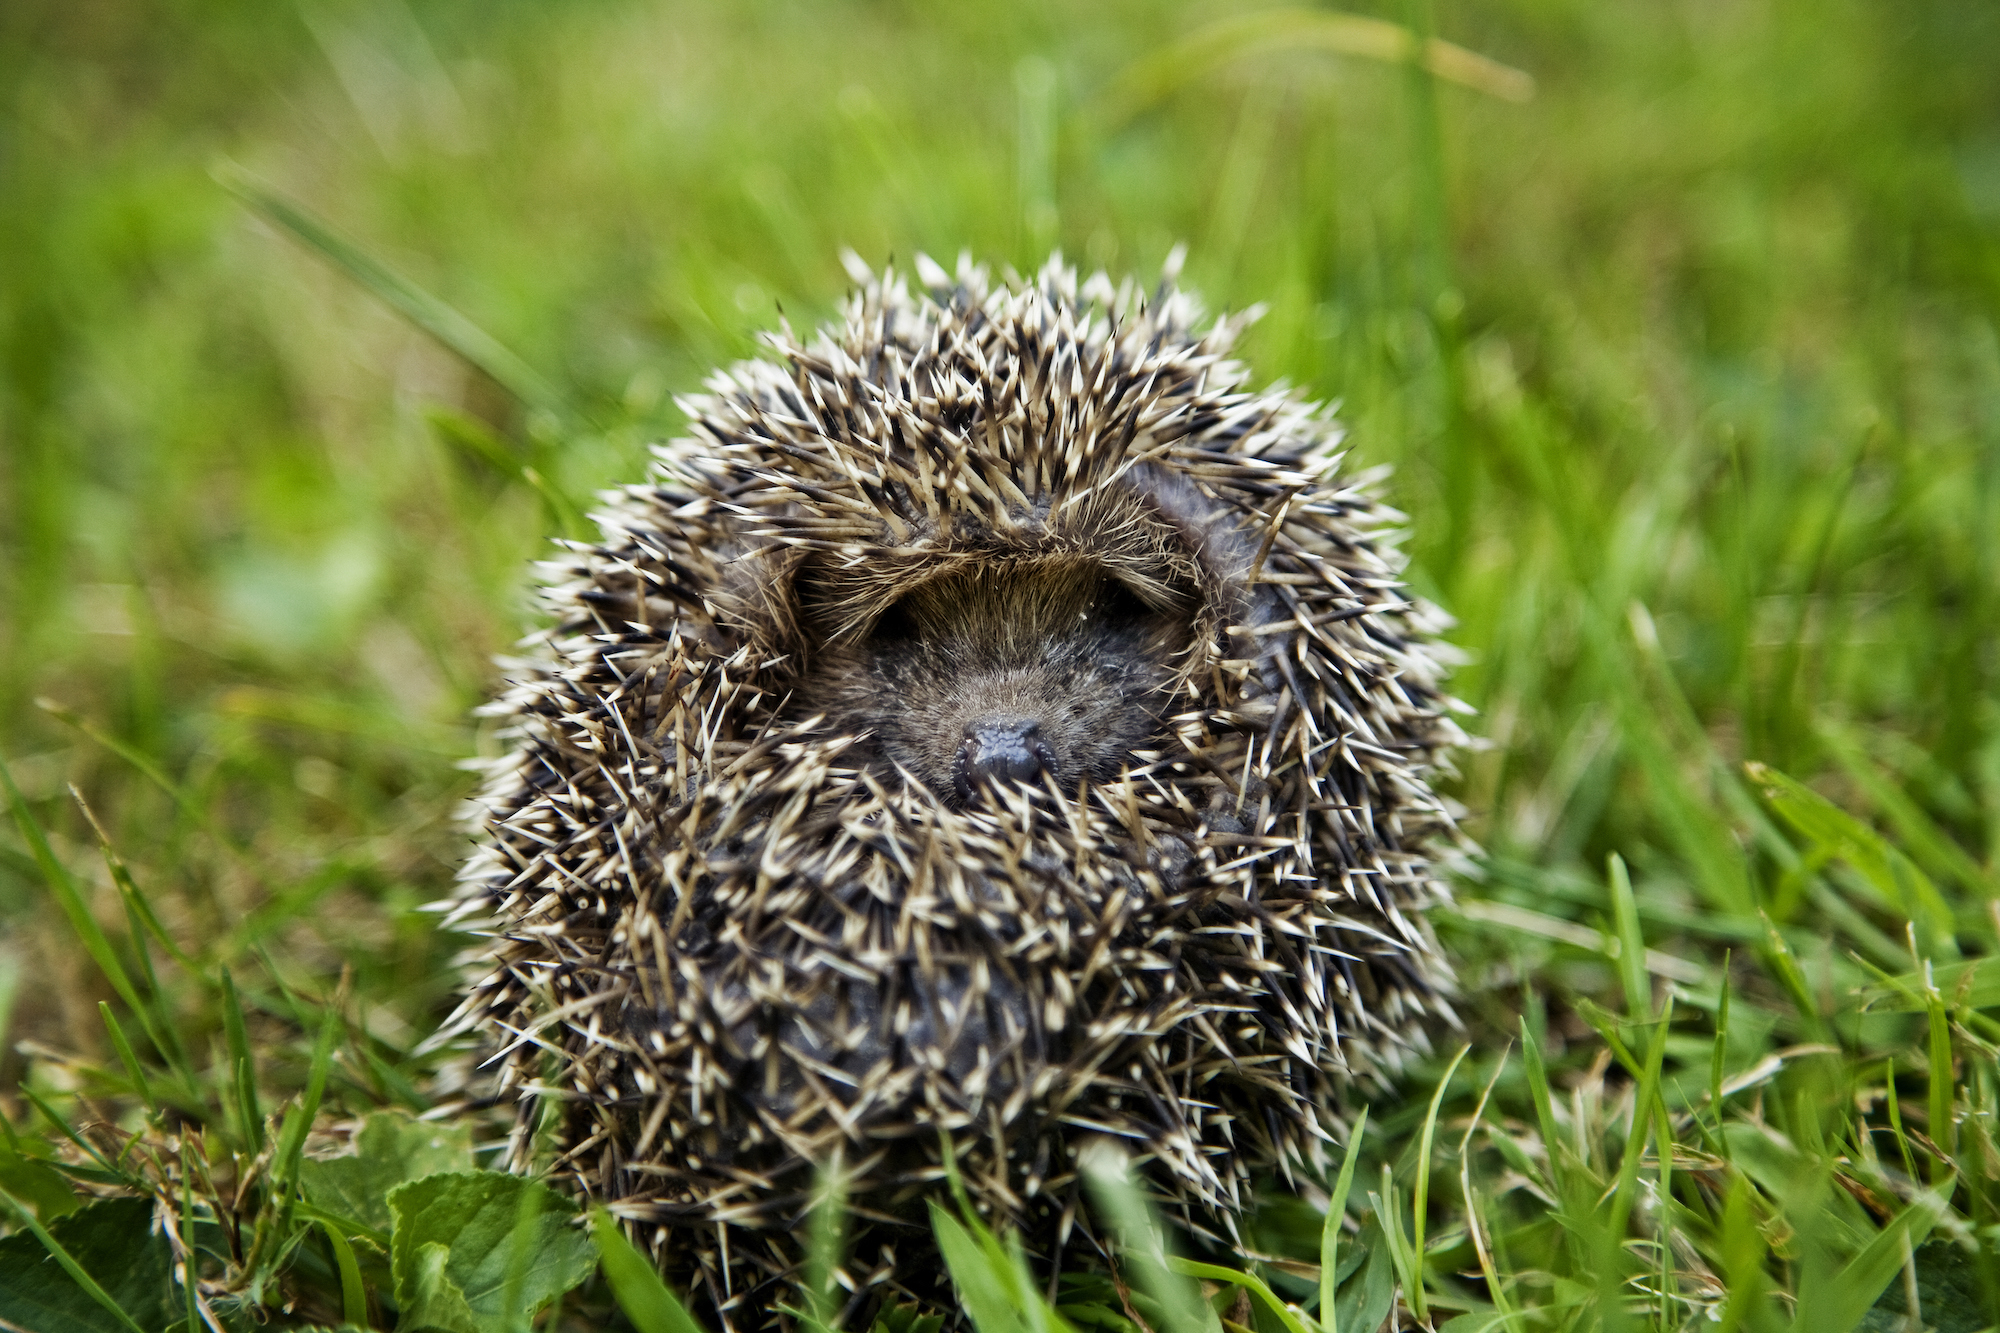 Tiny hedgehog awakening from winter hibernation in fresh green grass